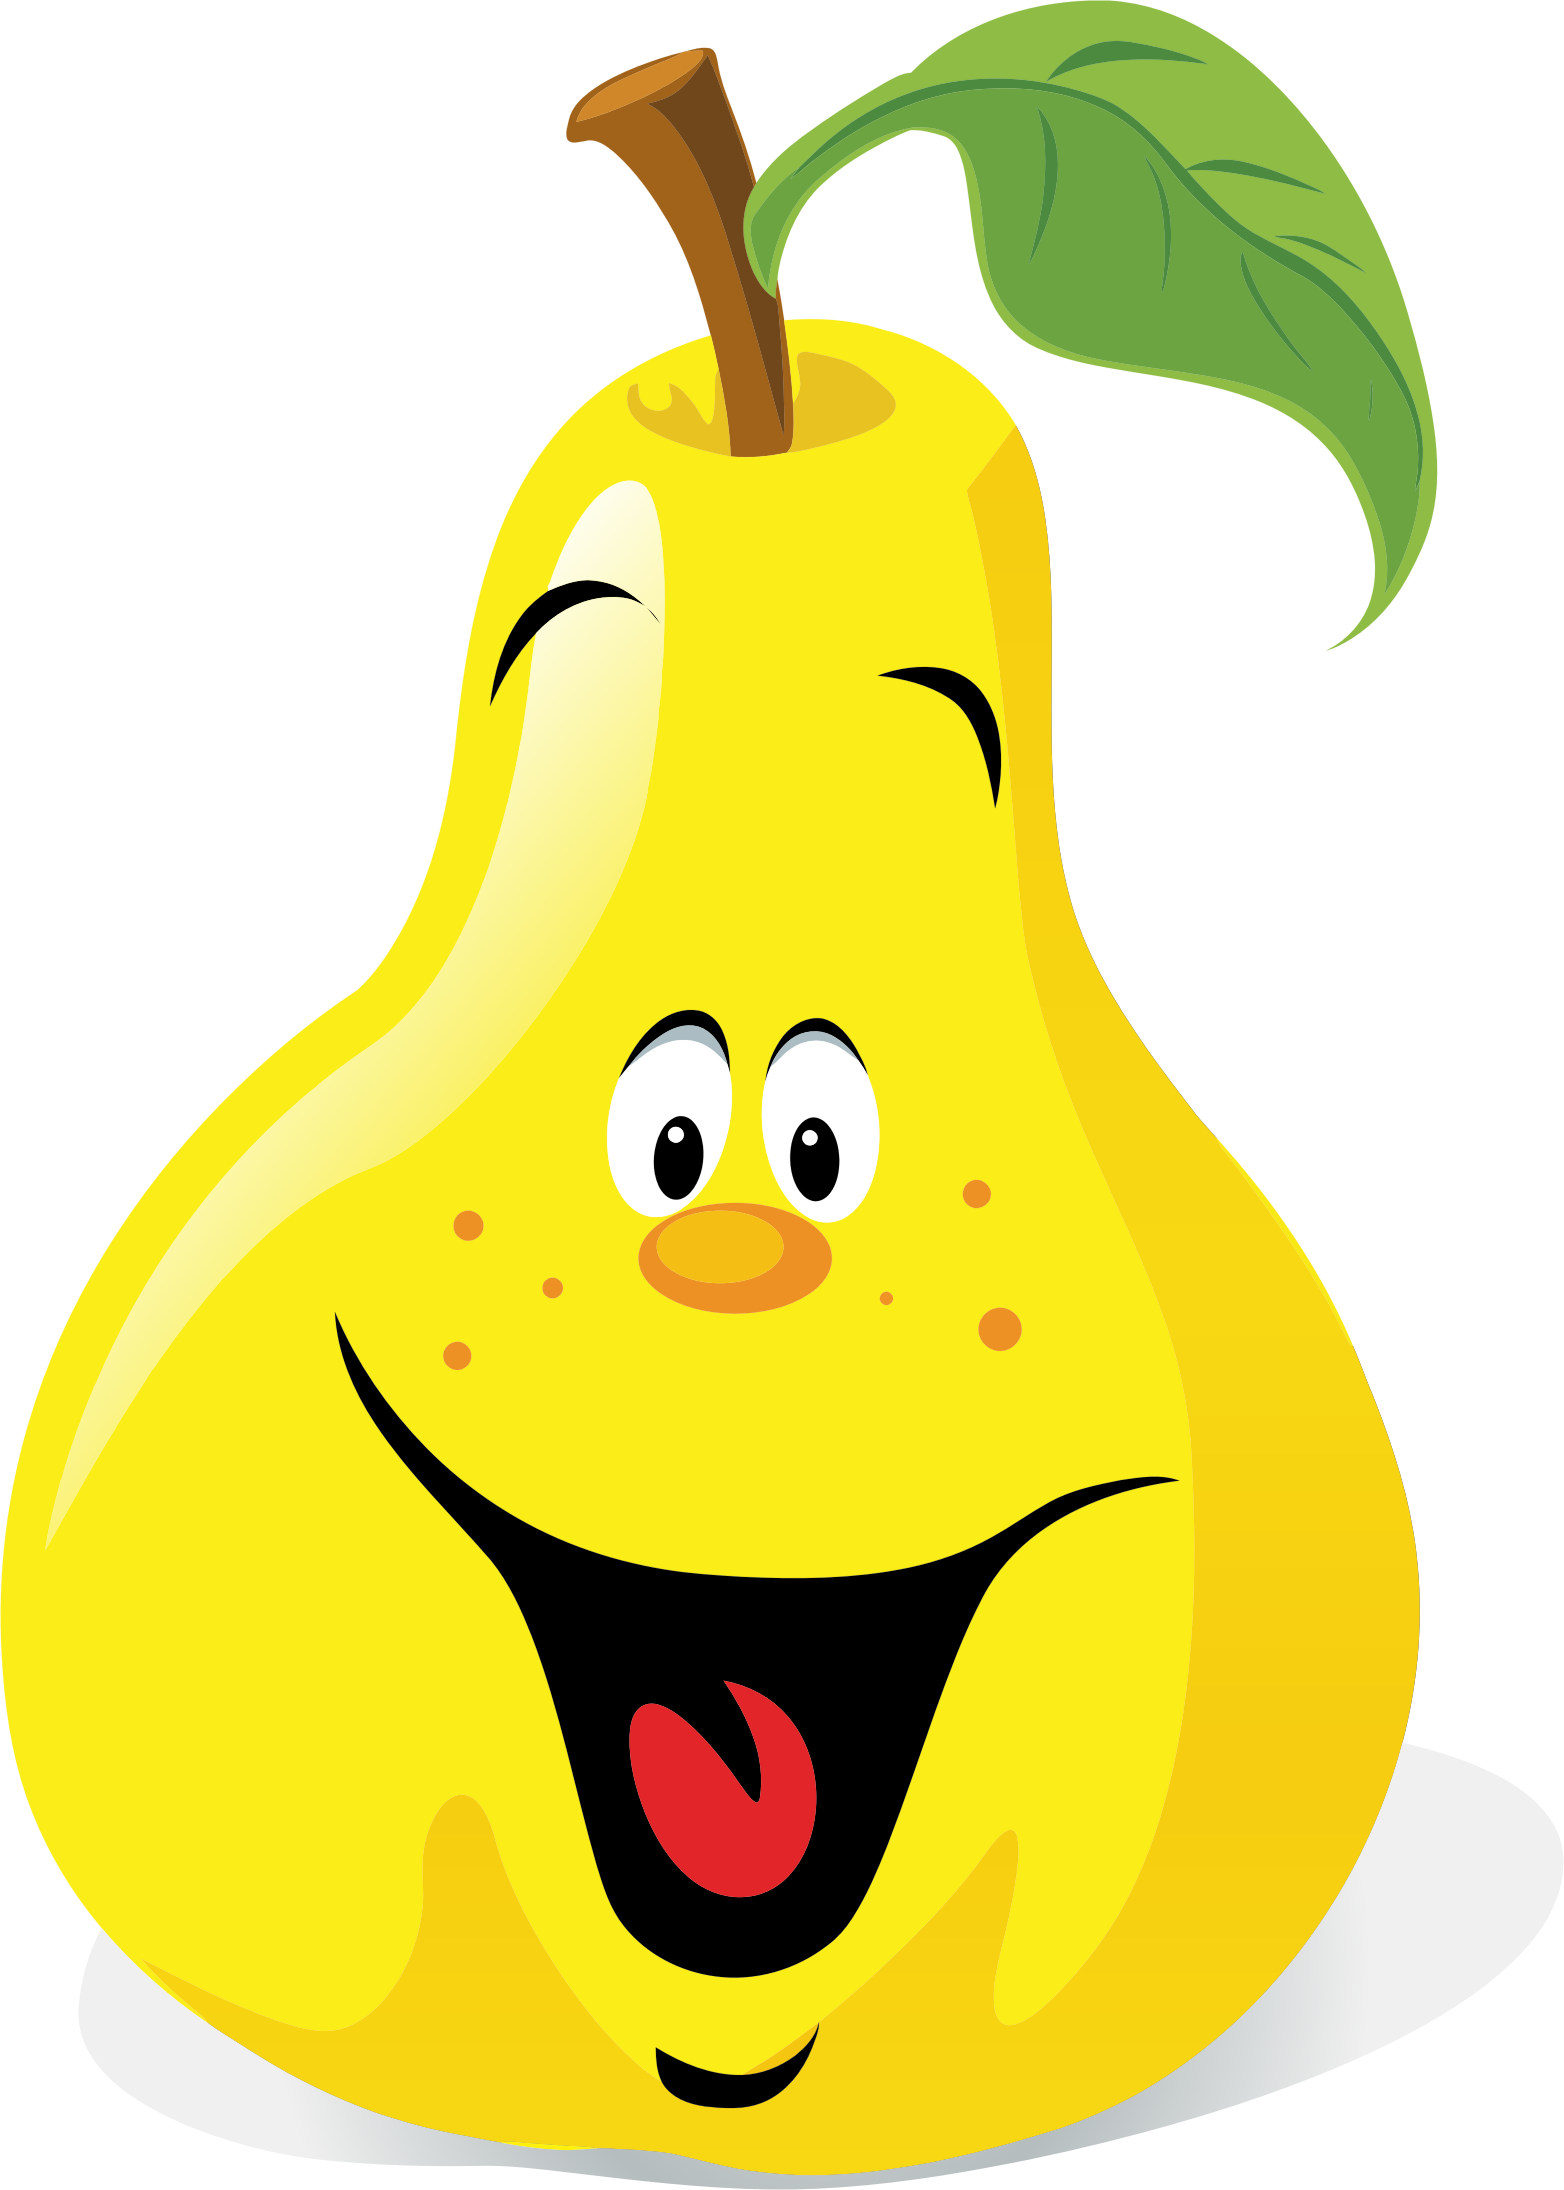 Happy pear by gdj. Corn clipart anthropomorphic